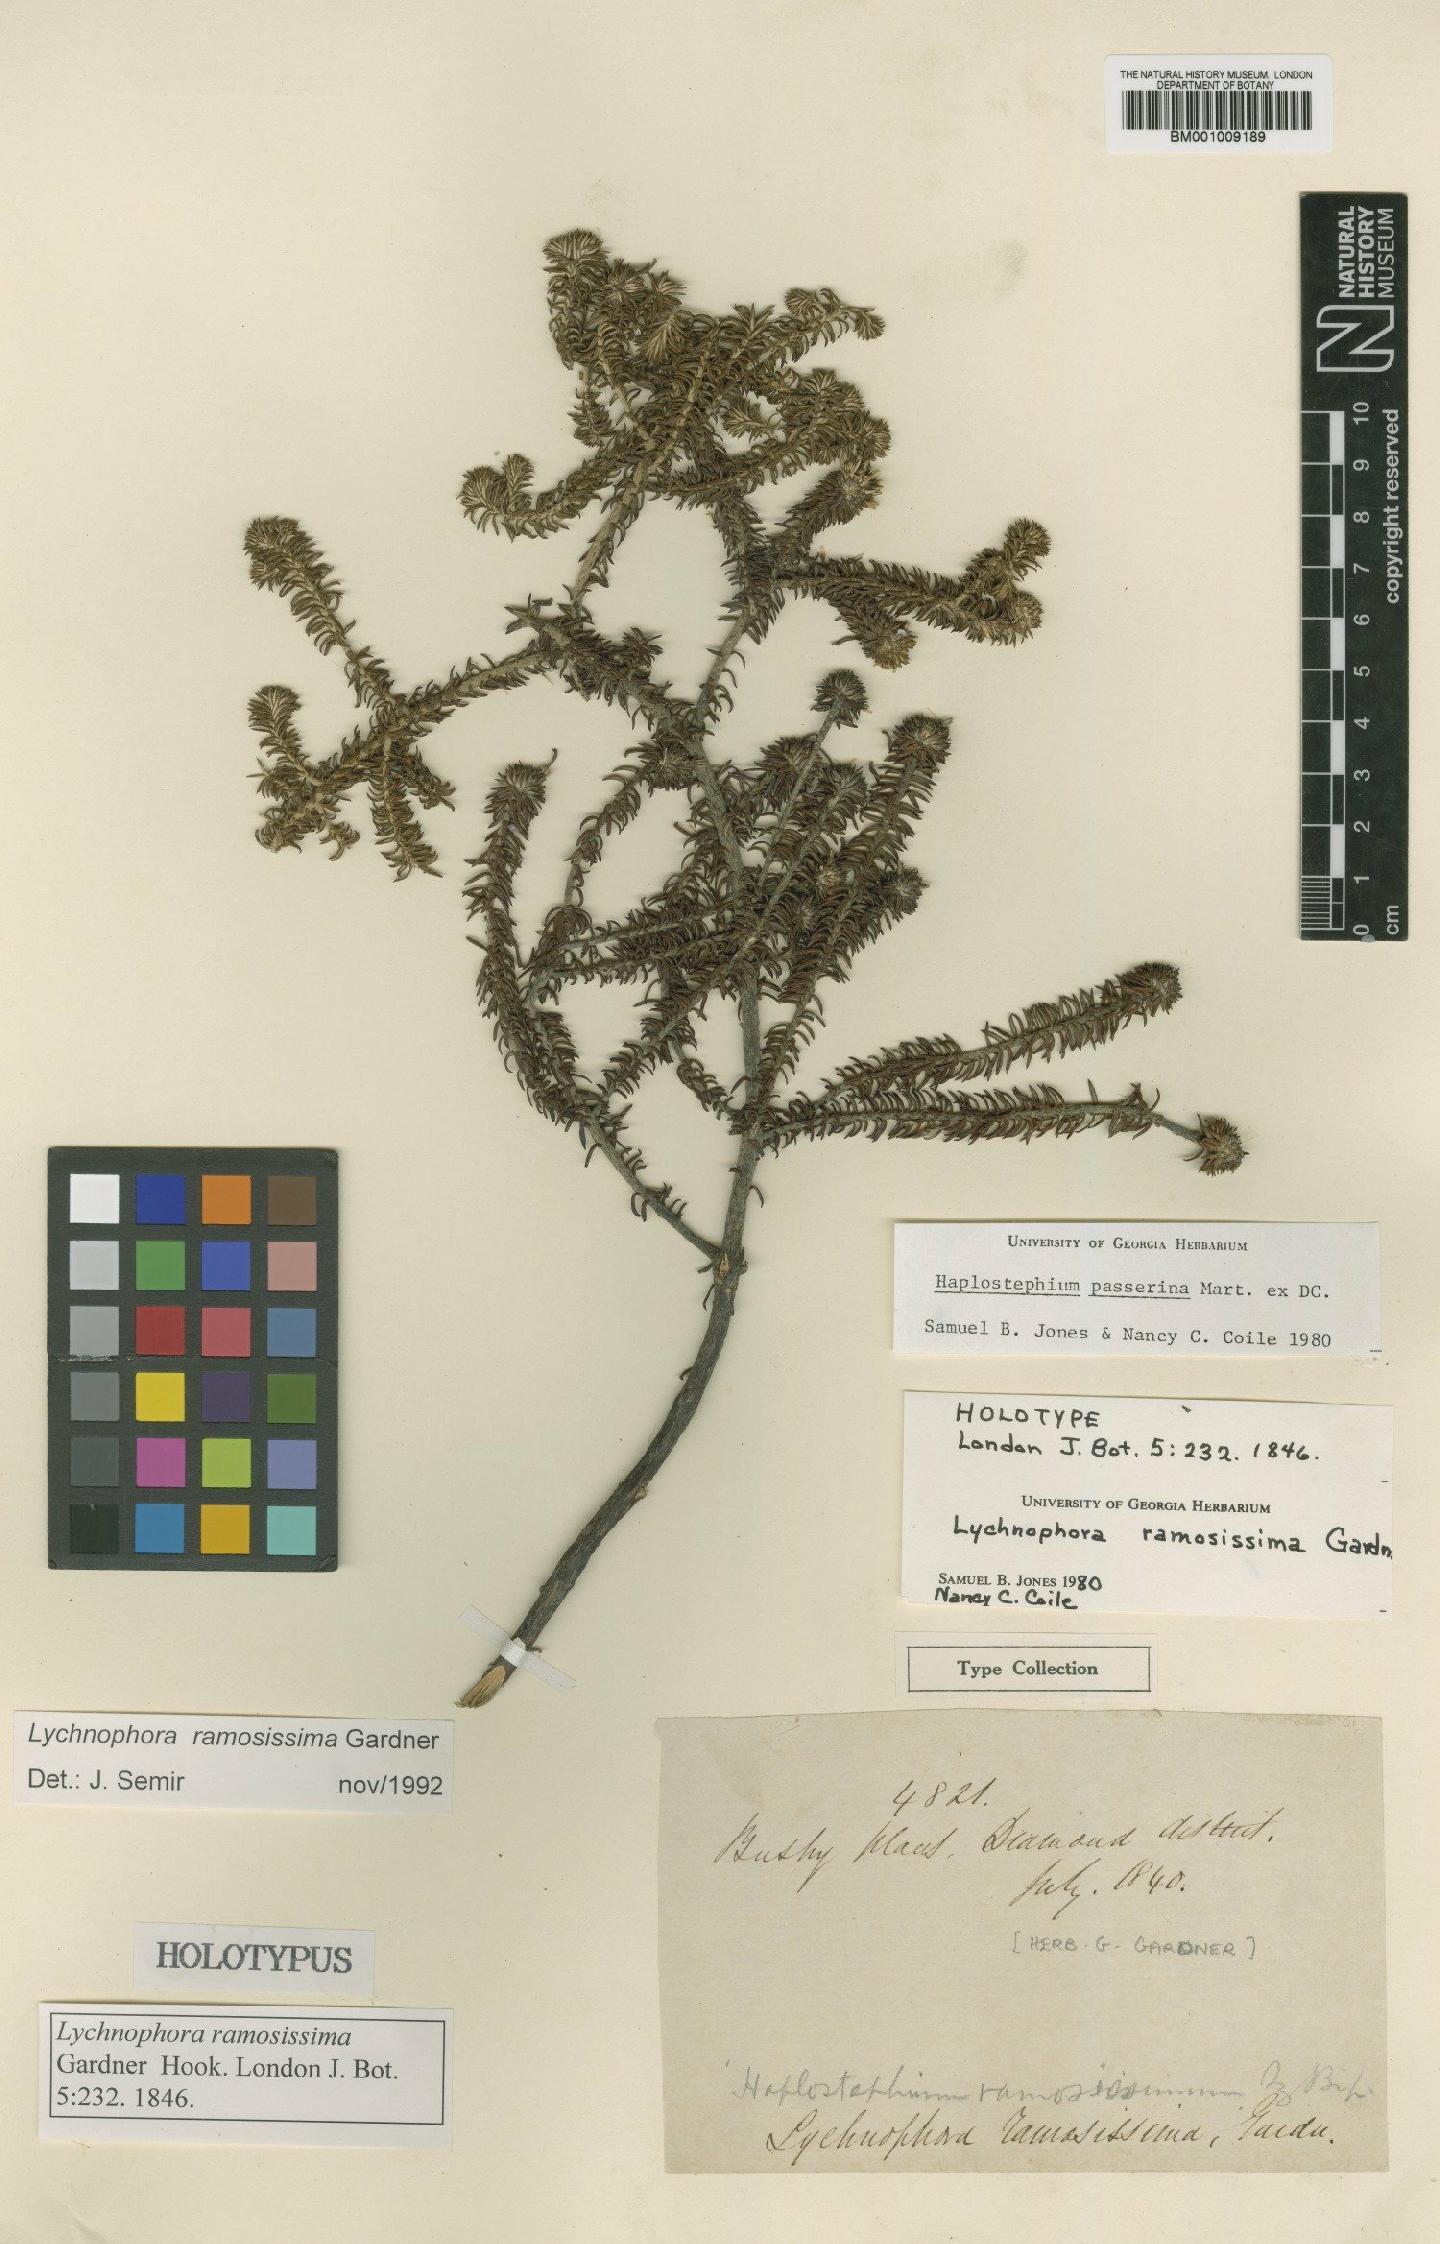 To NHMUK collection (Lychnophora ramosissima Gardner; Holotype; NHMUK:ecatalogue:557187)